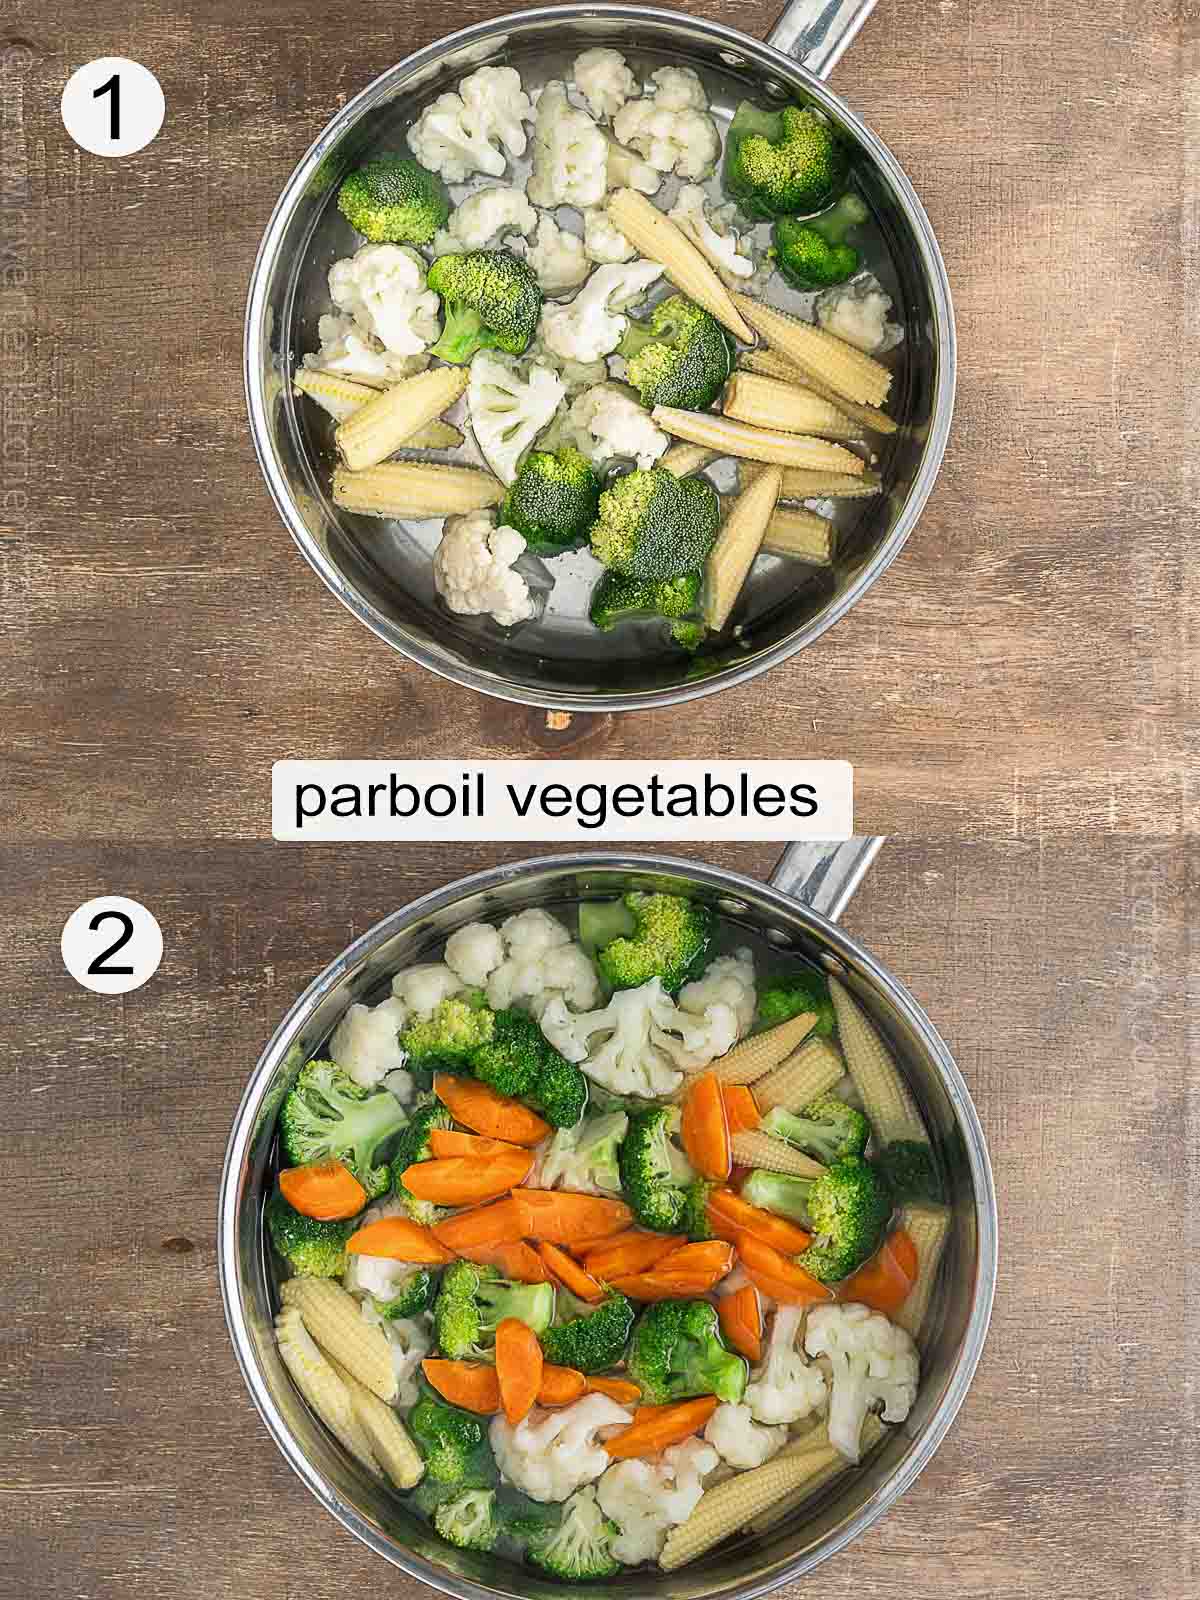 parboiling vegetables to get crisp yet tender vegetables.